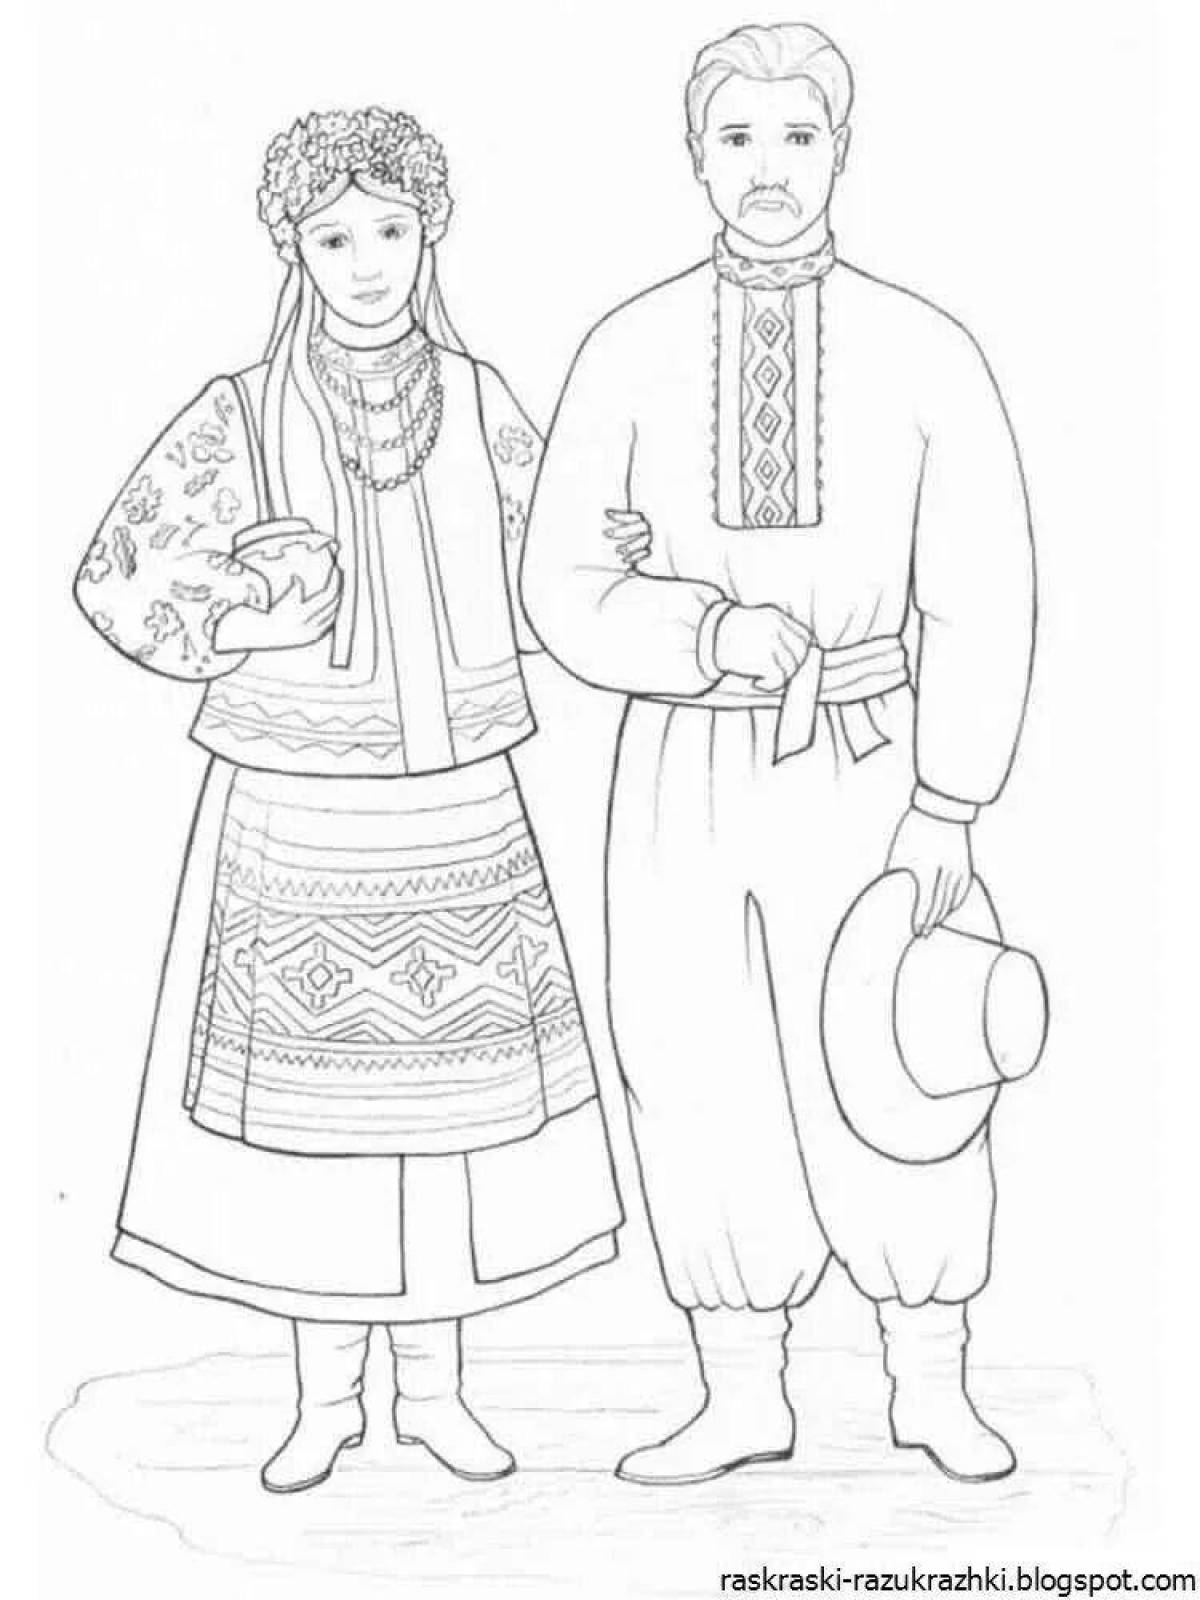 Coloring book joyful Russian folk costume